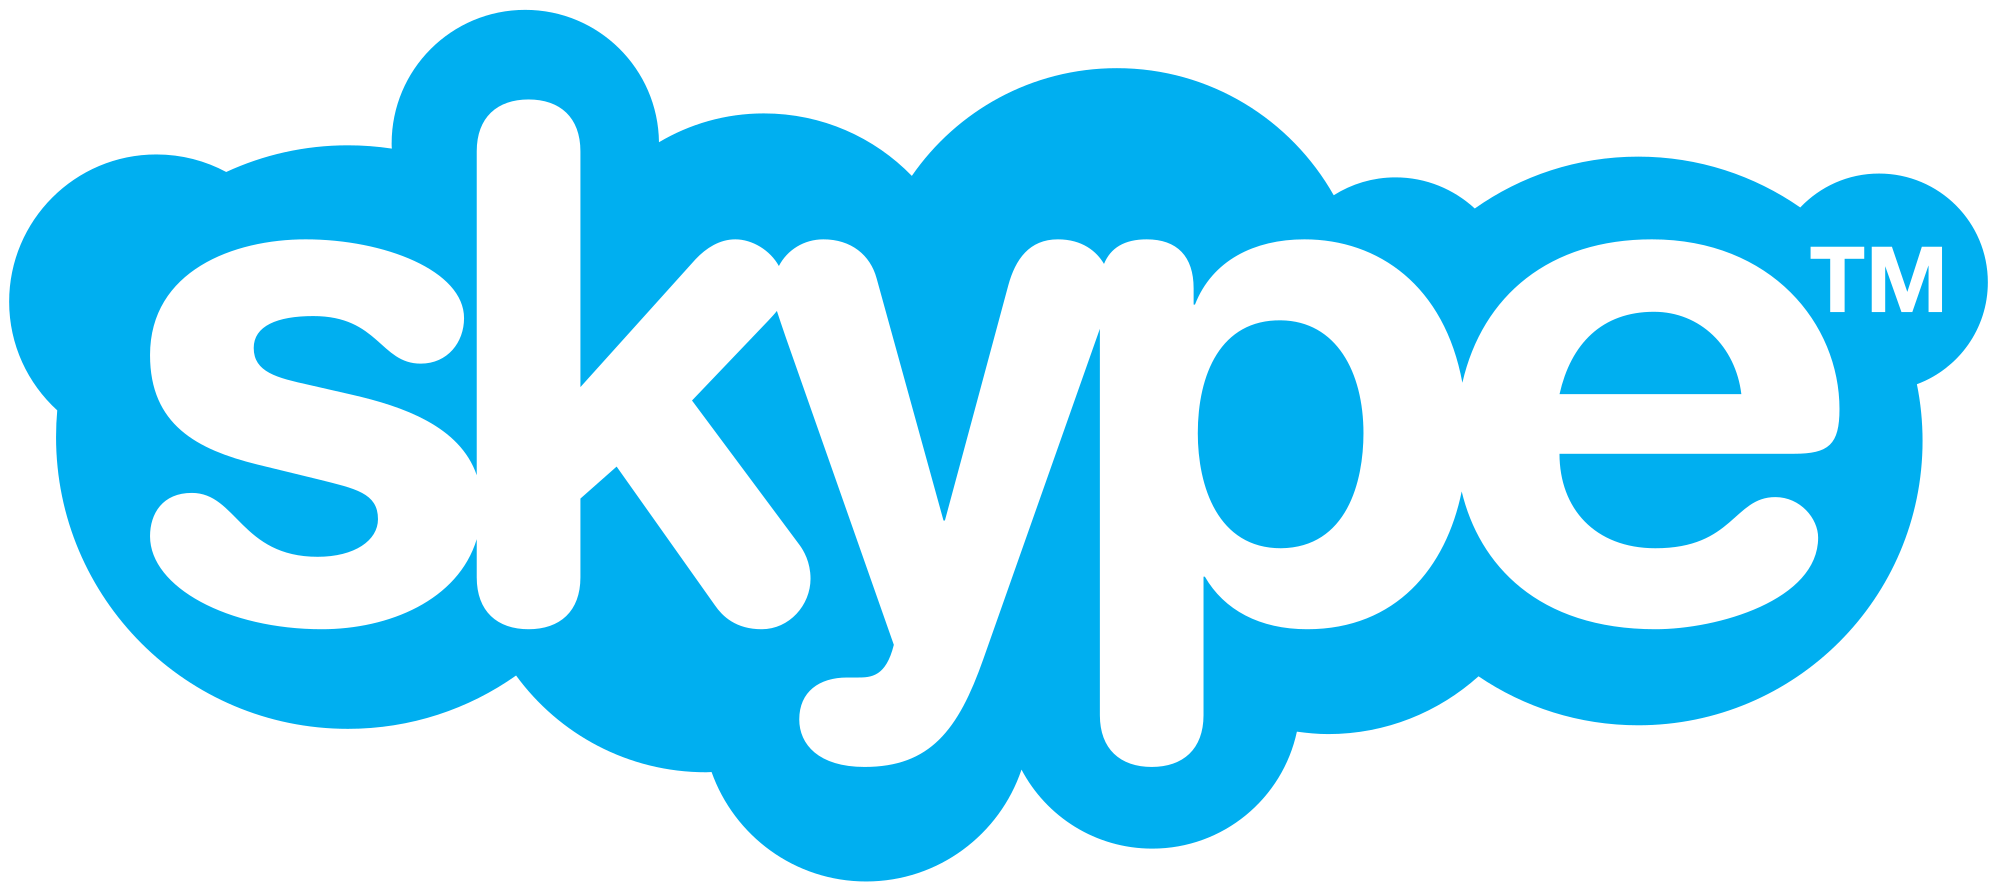 Current Skype Logo - Skype logo.svg